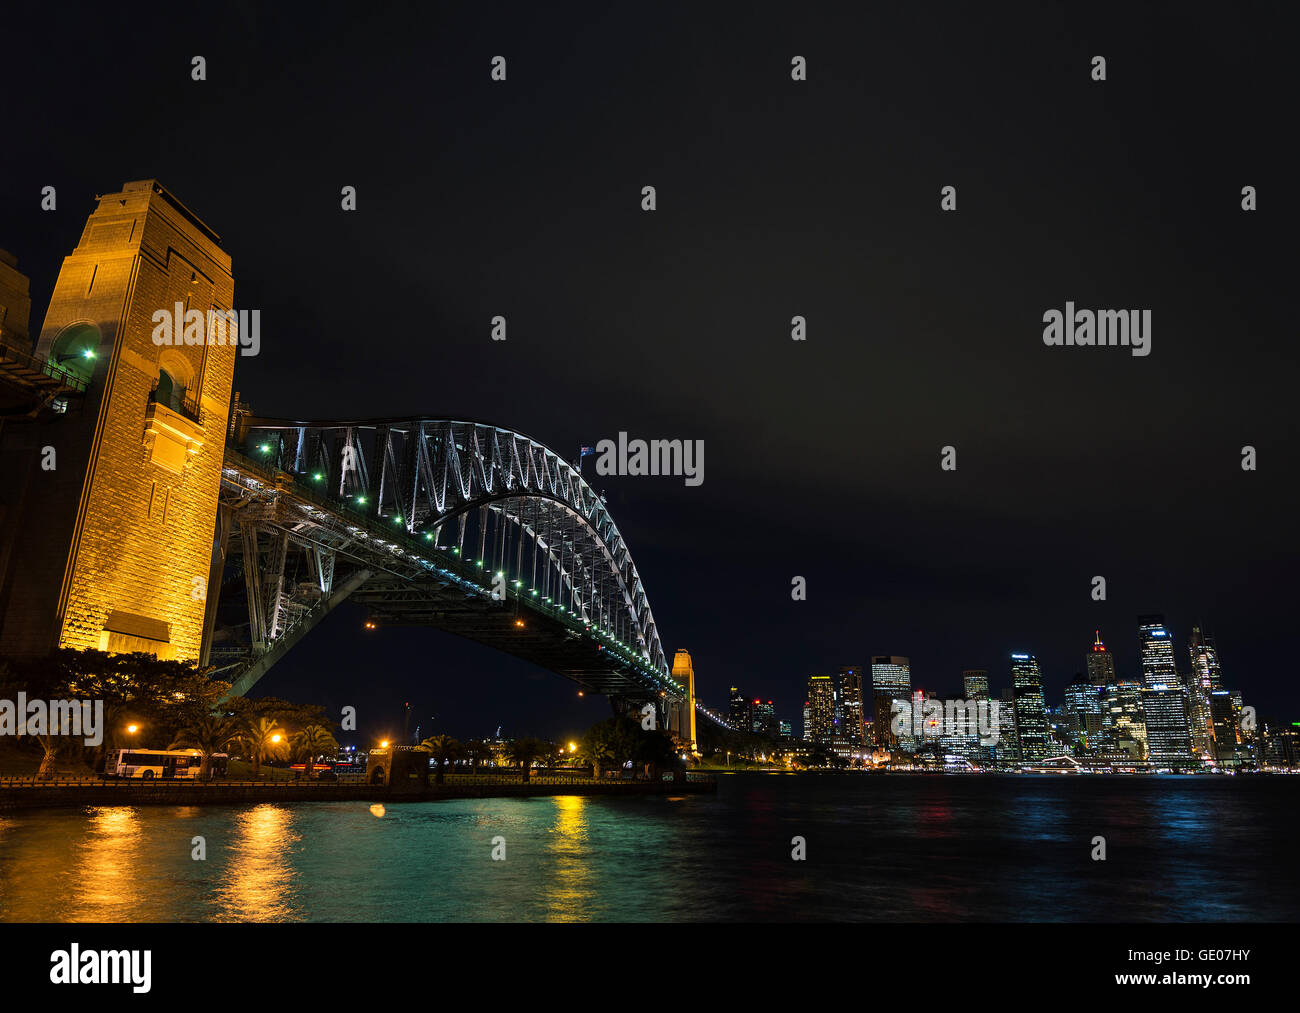 famous sydney harbour bridge and CBD skyline landmarks in australia at night Stock Photo